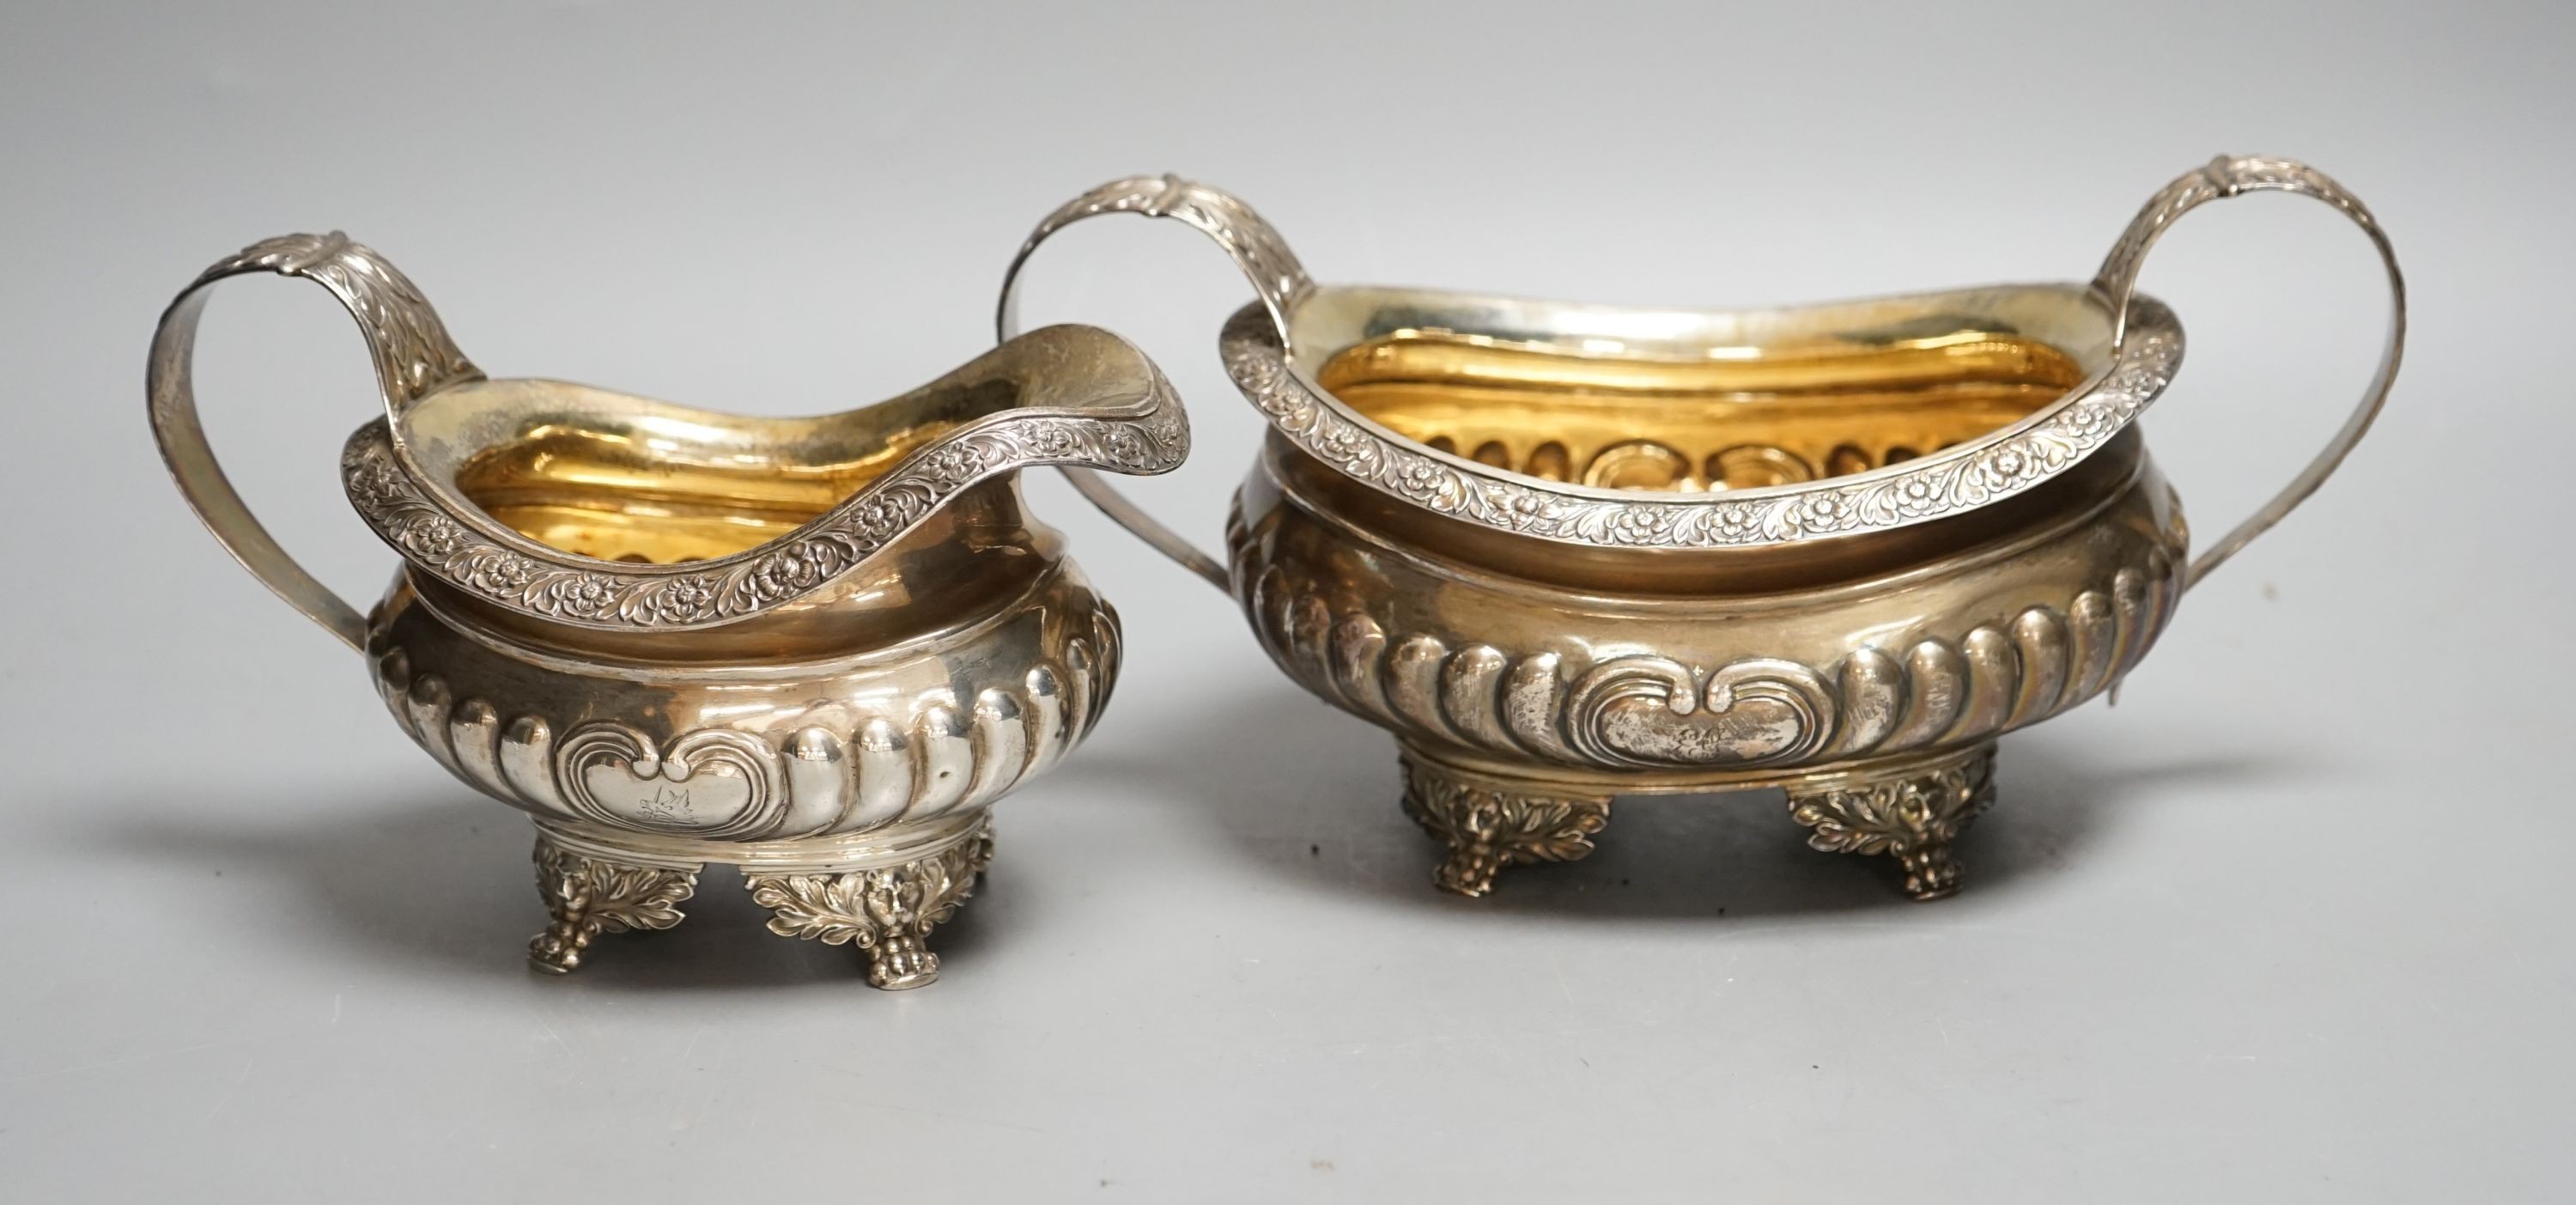 A late George III silver sugar bowl and cream jug, Robert Smeaton, Edinburgh, 1819, gross 19oz.                                                                                                                             